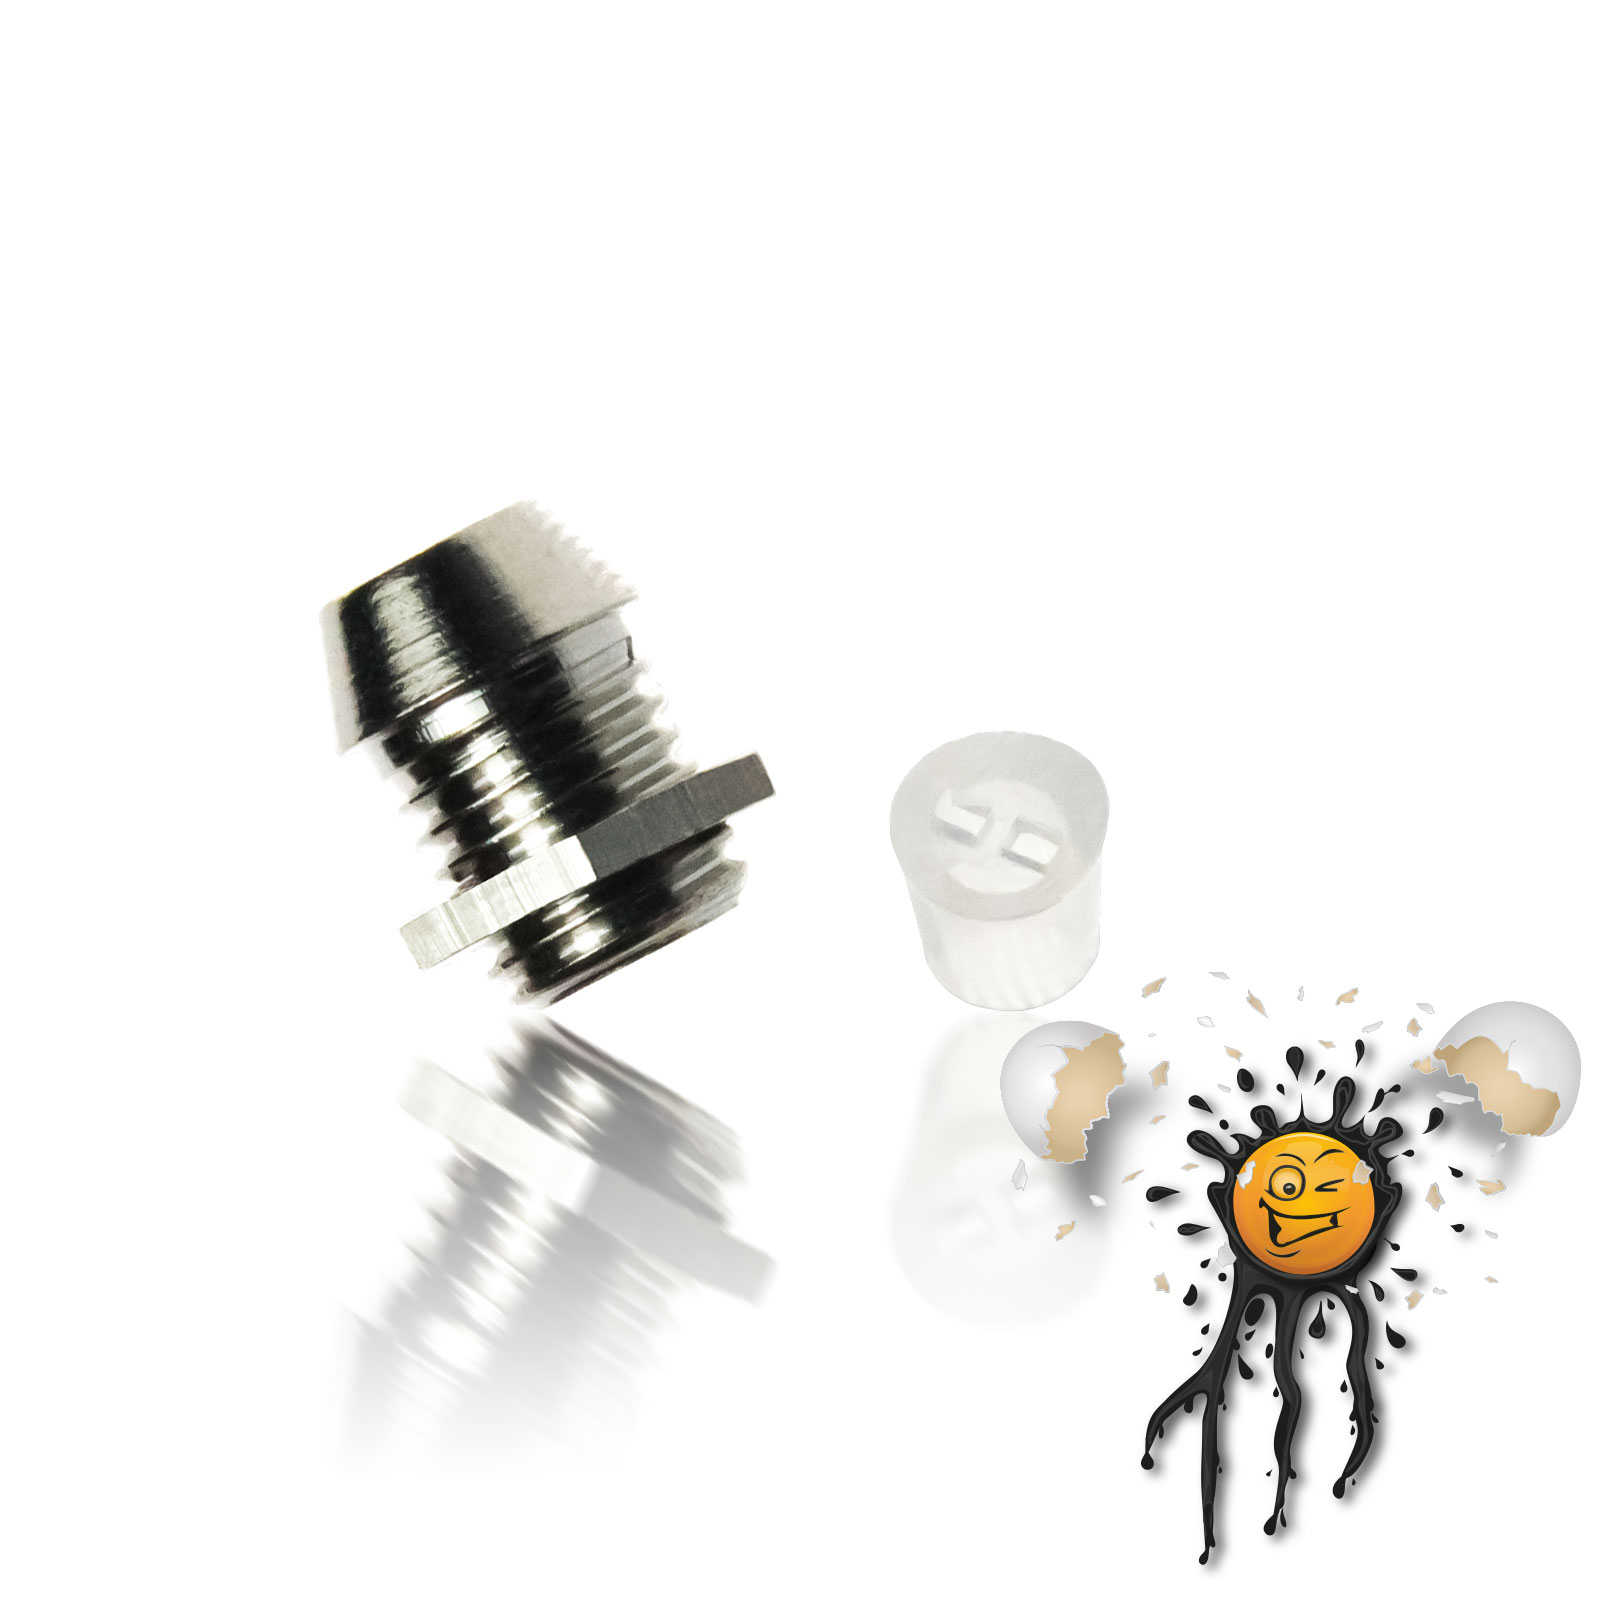 3mm Metal LED Holder incl. Insulator